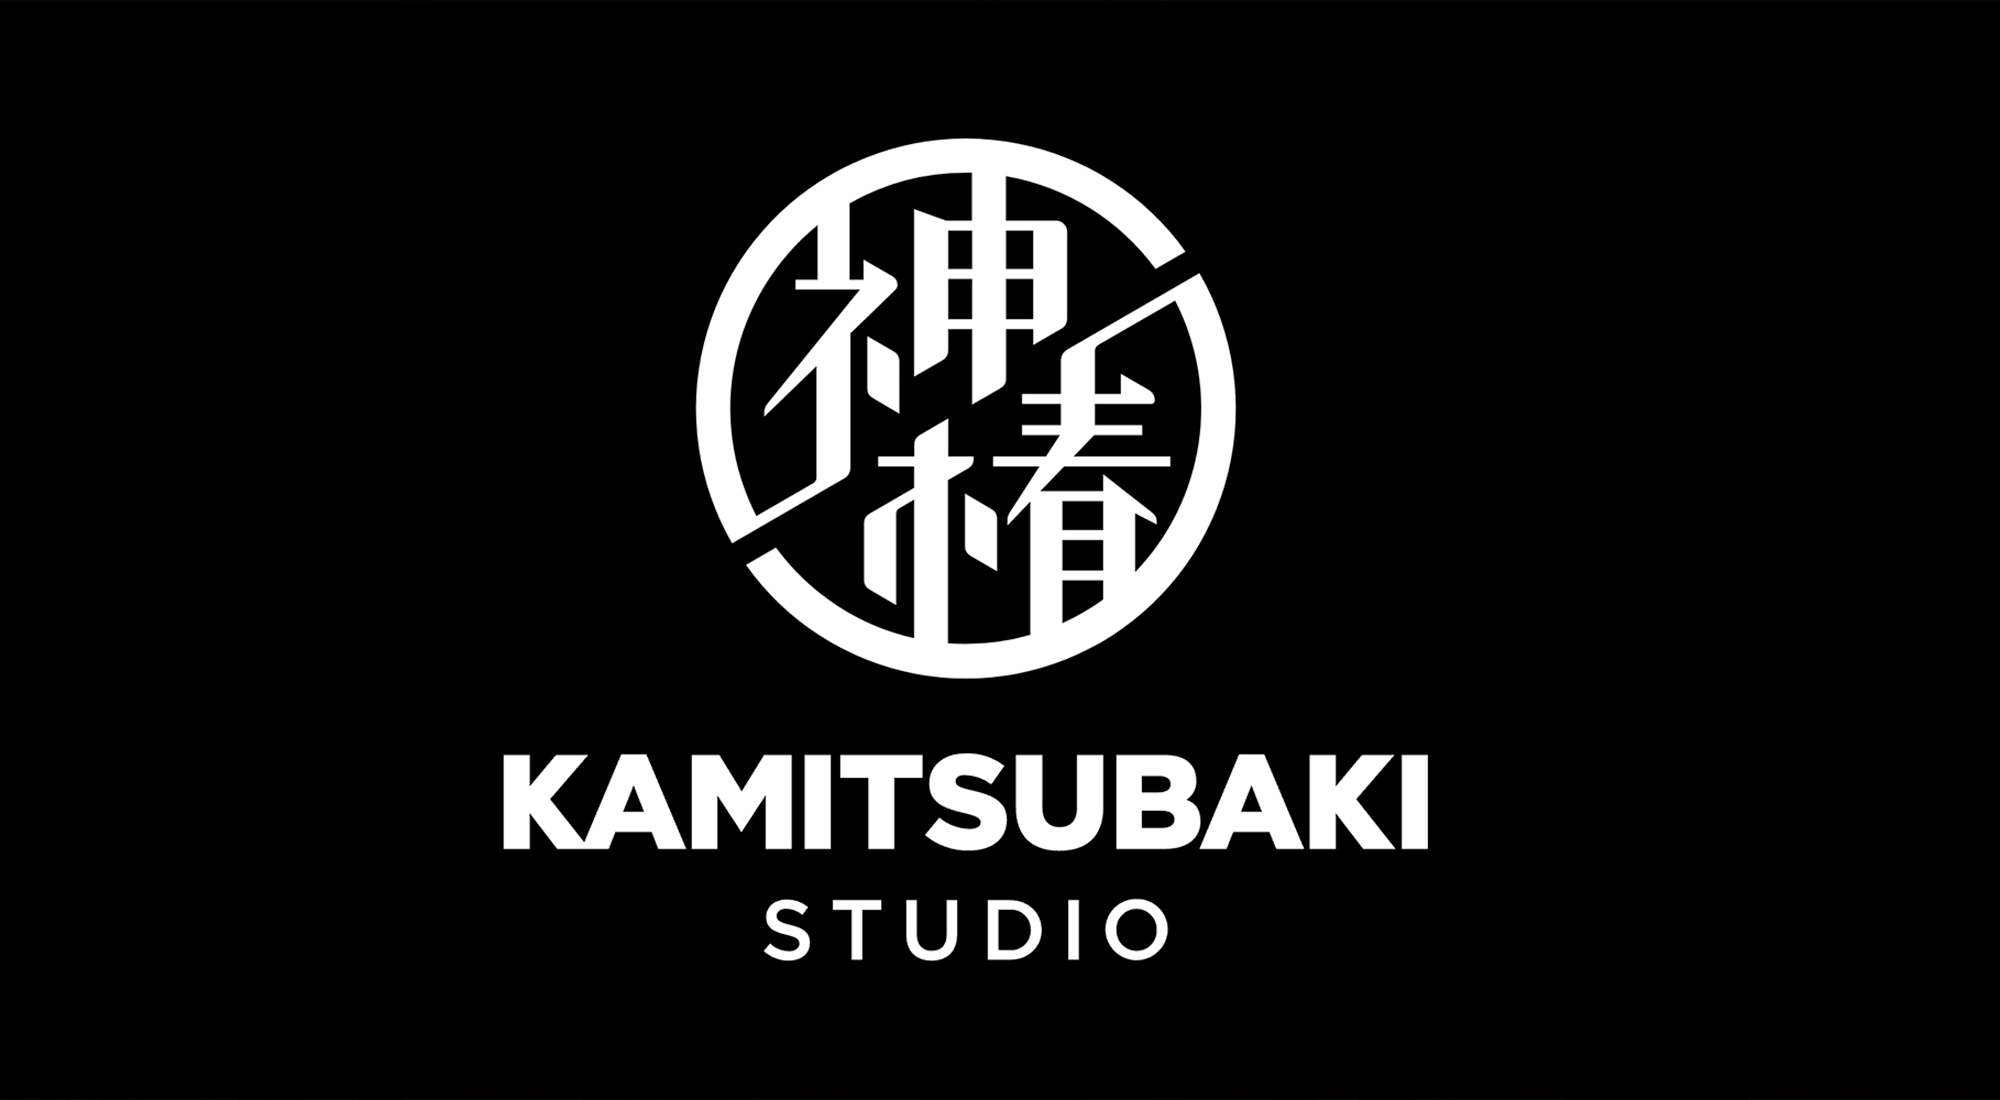 KAMITSUBAKI STUDIO OFFICIAL SITE